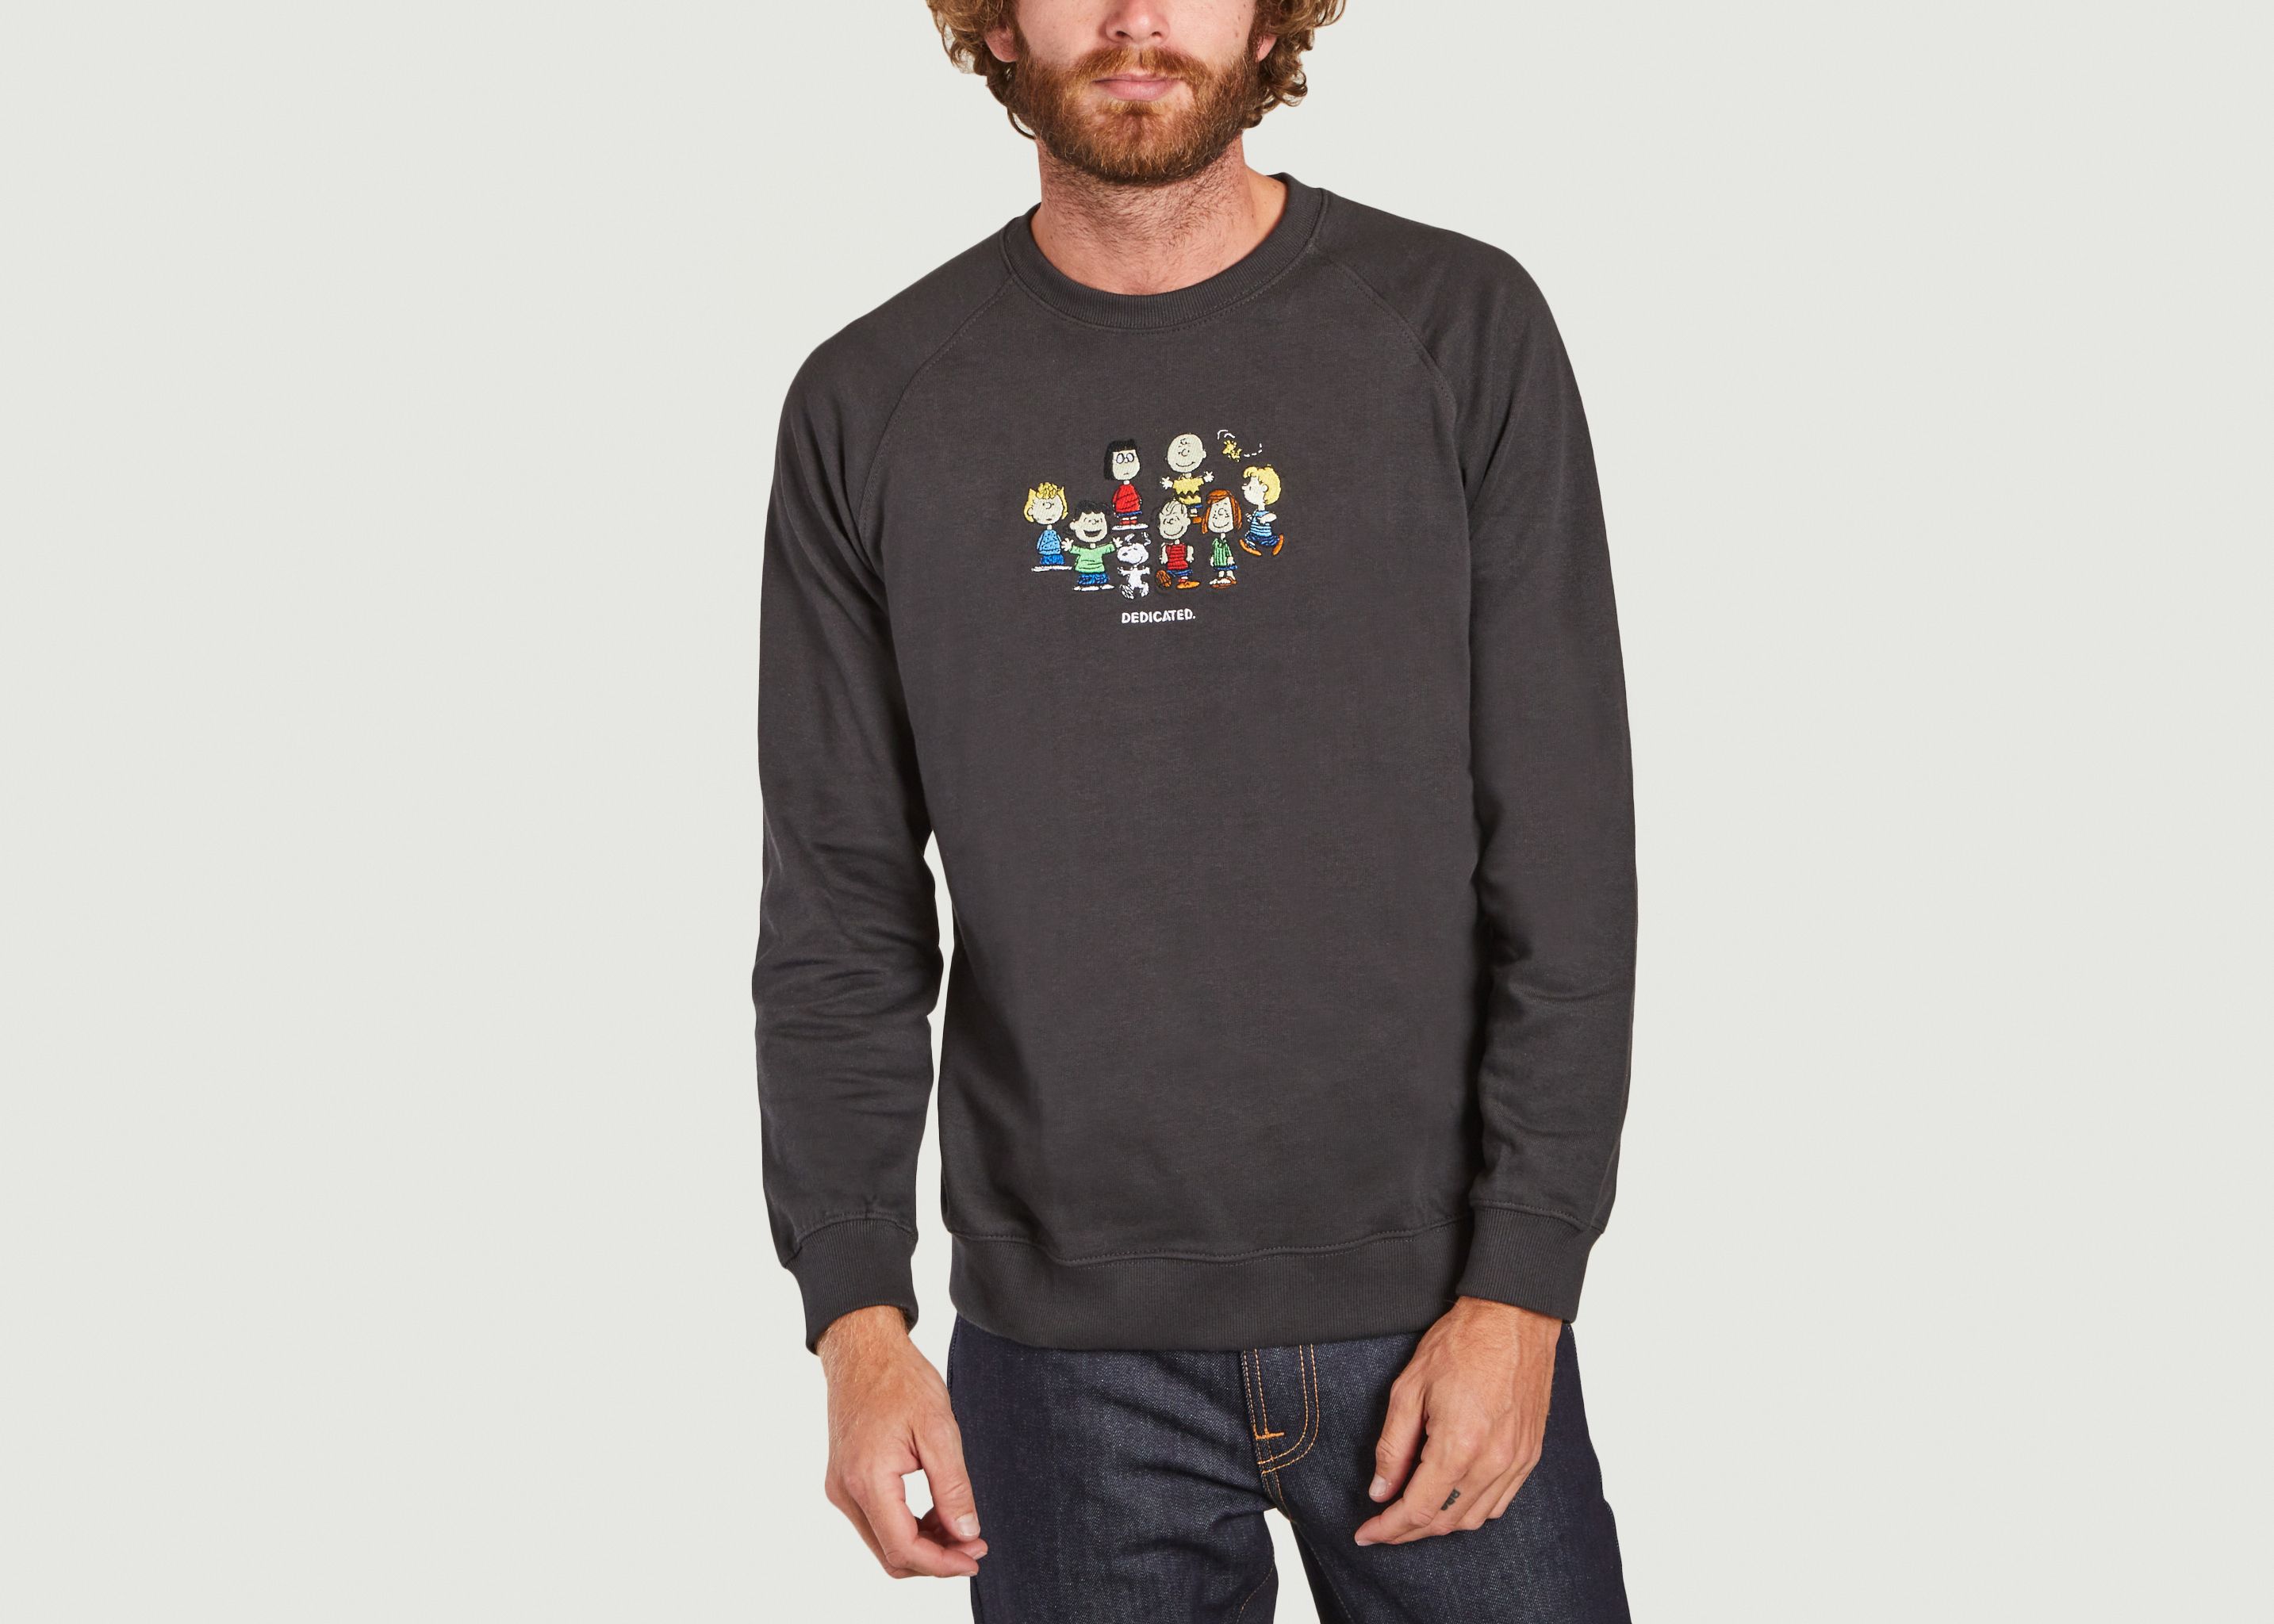 Peanuts Friends Dedicated Brand x Snoopy sweatshirt - Dedicated Brand